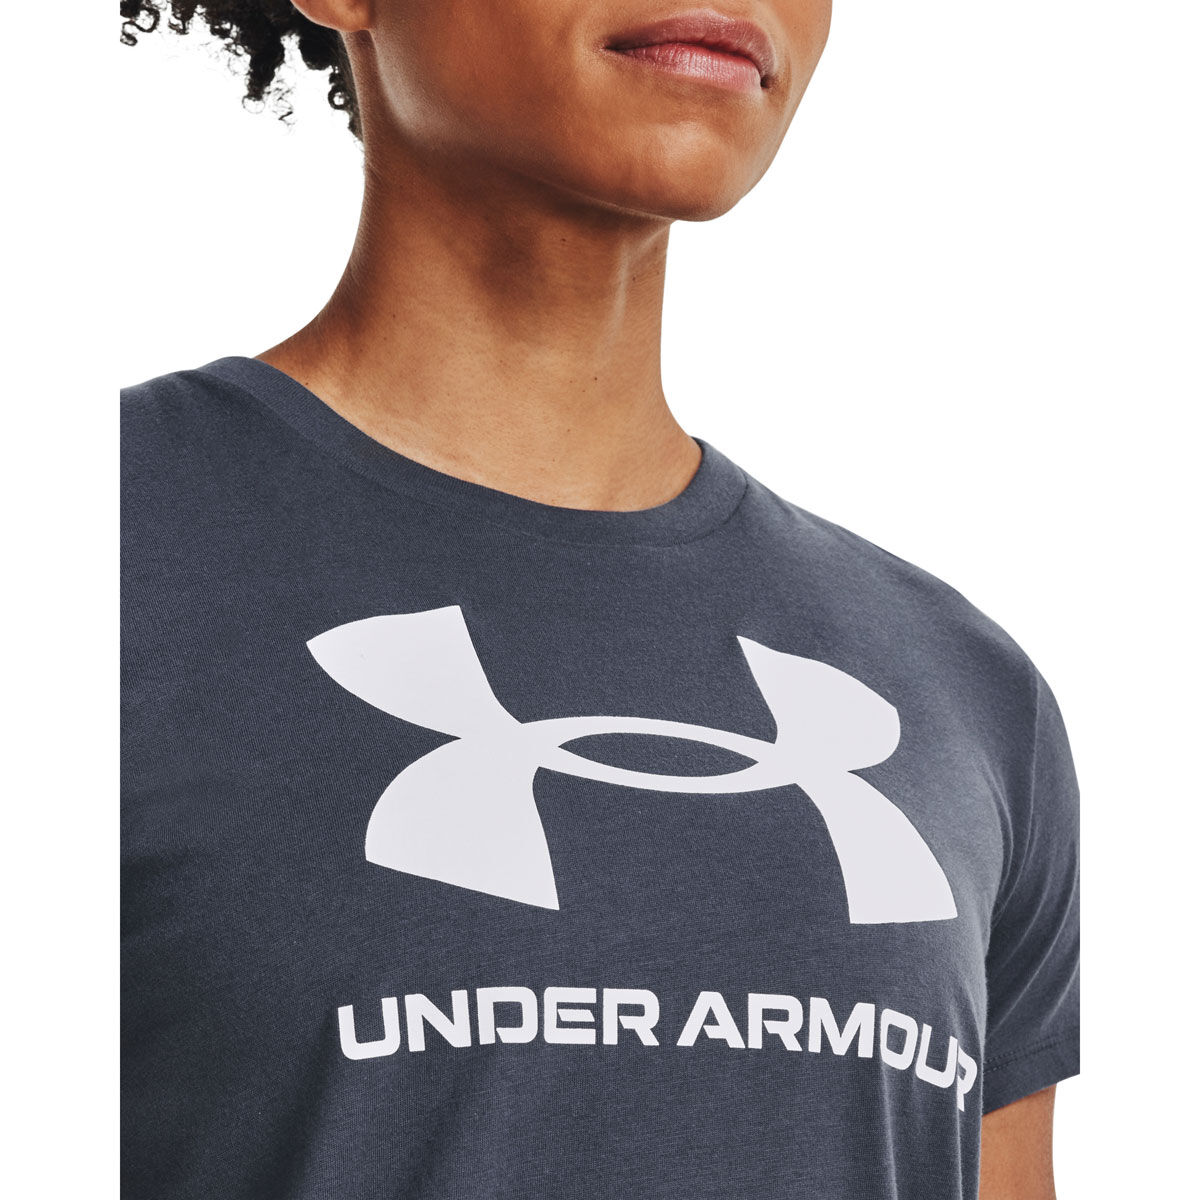 Under Armour Womens Sportstyle Logo Tee Grey XS, Grey, rebel_hi-res